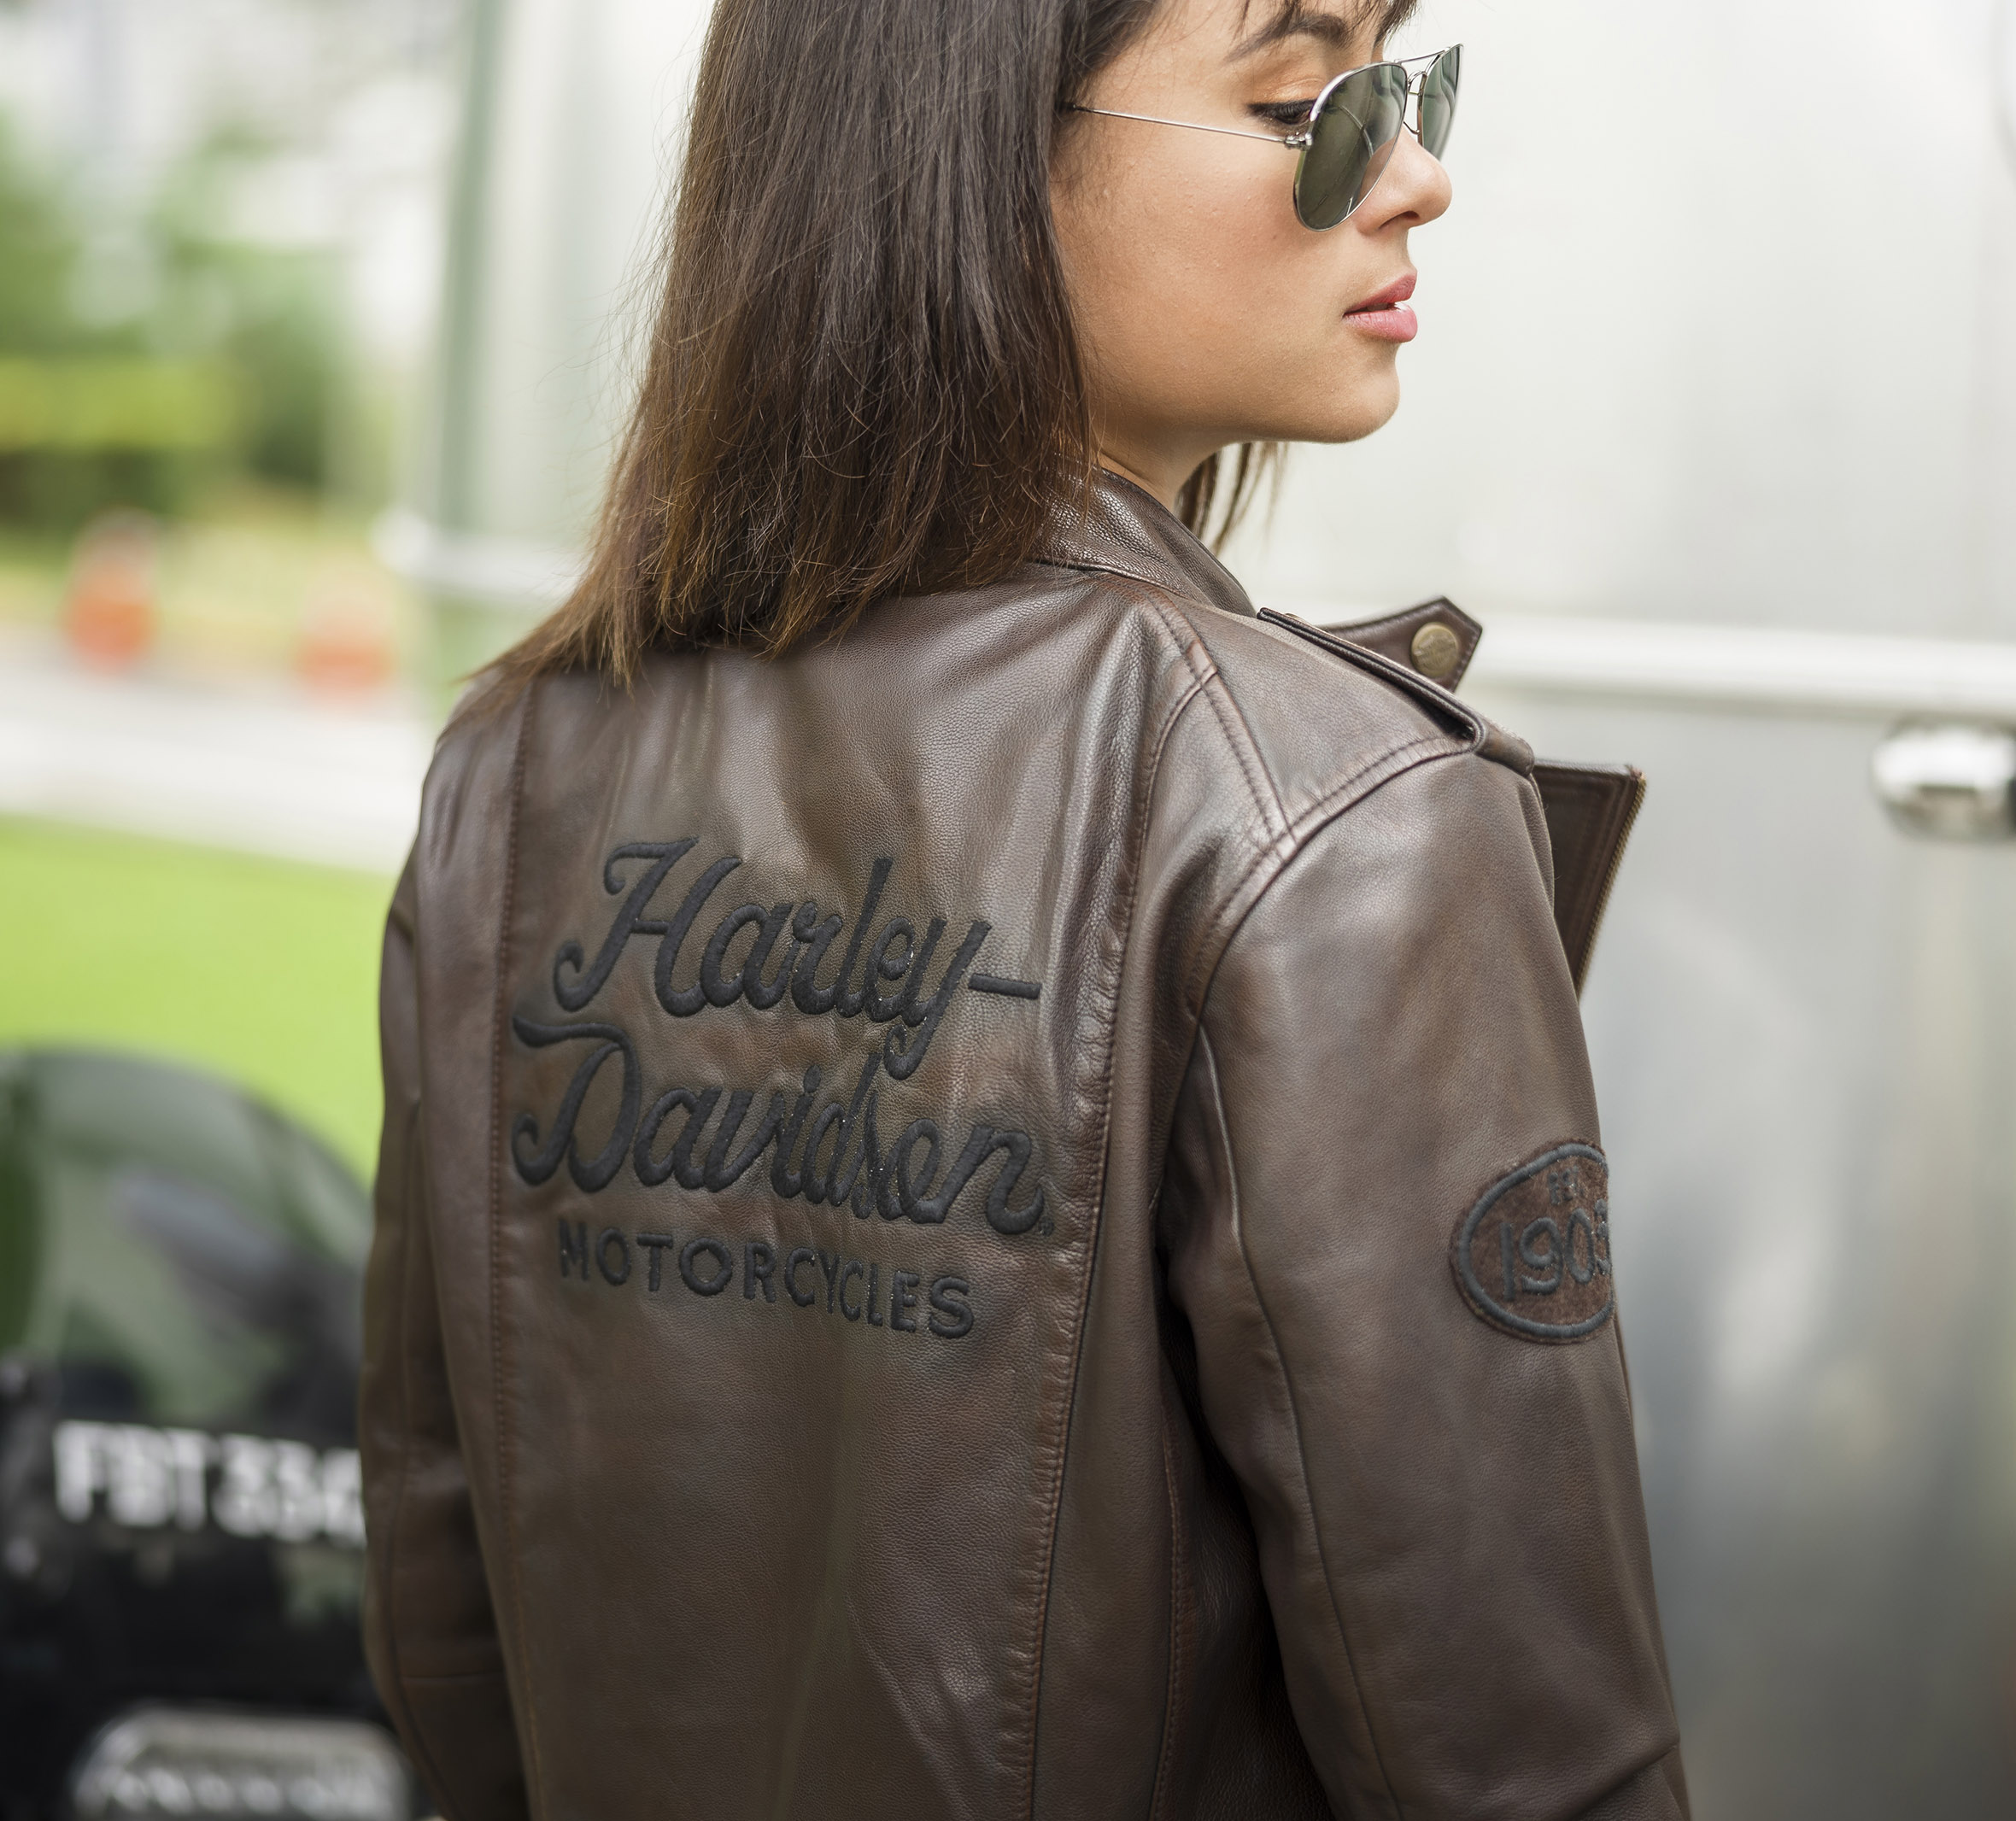 Harley davidson leather jacket survey.khl.ru